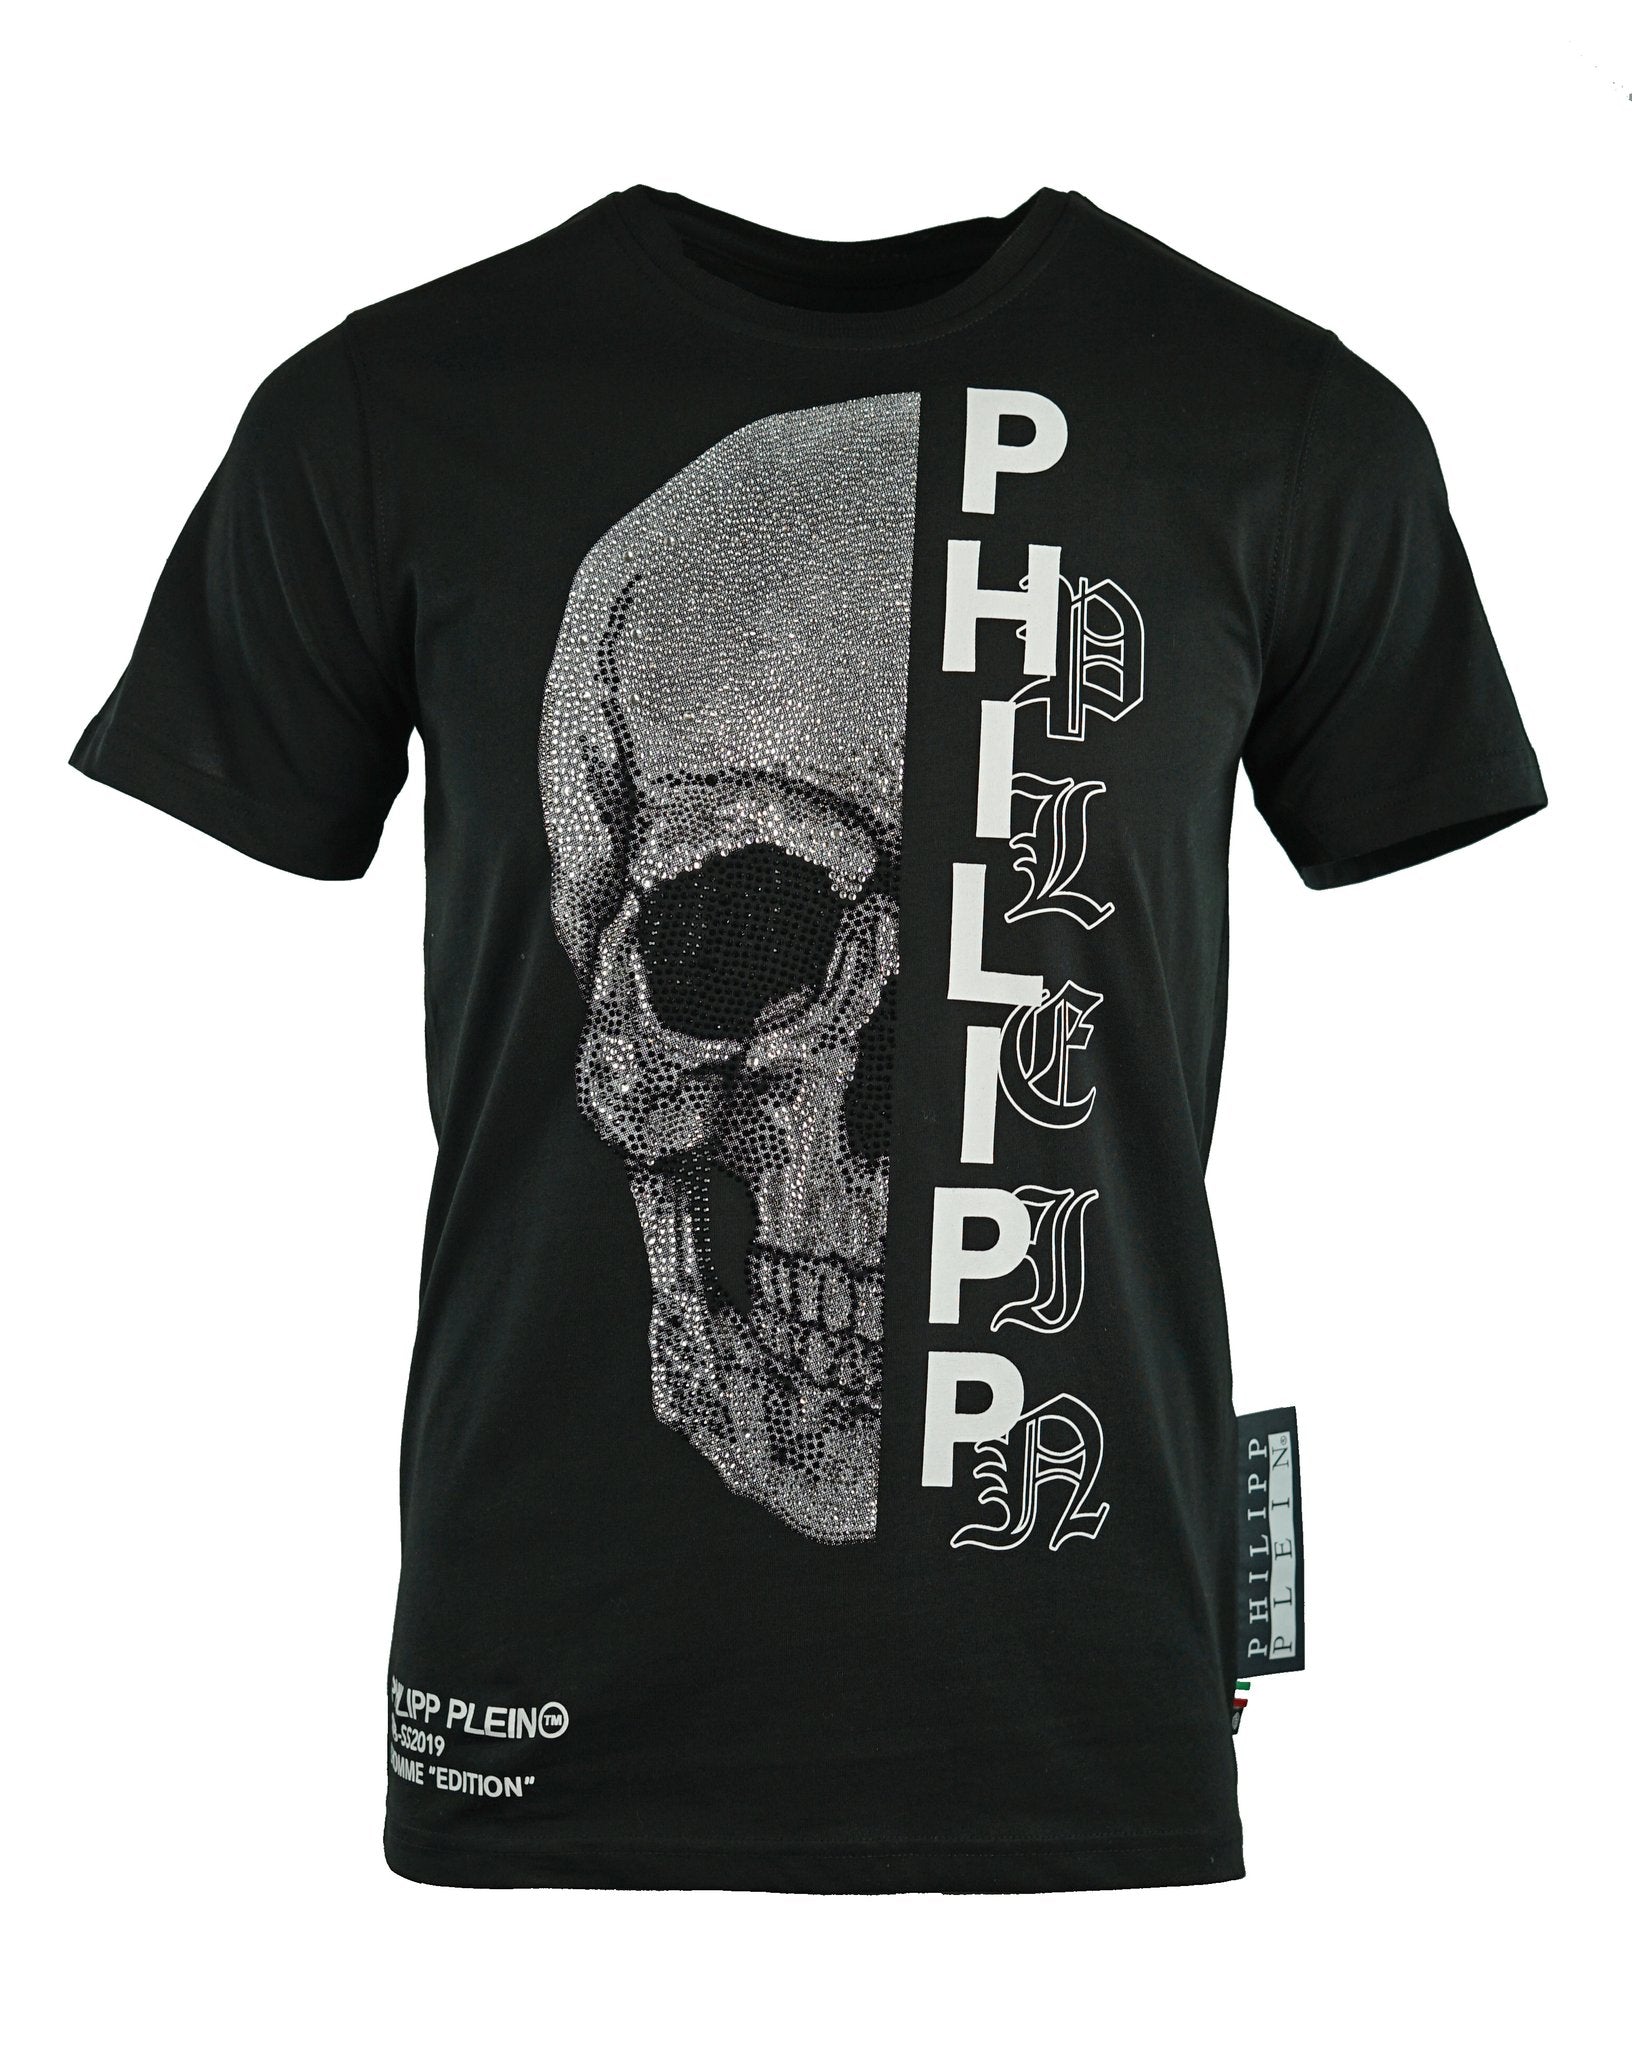 philippe plein shirt